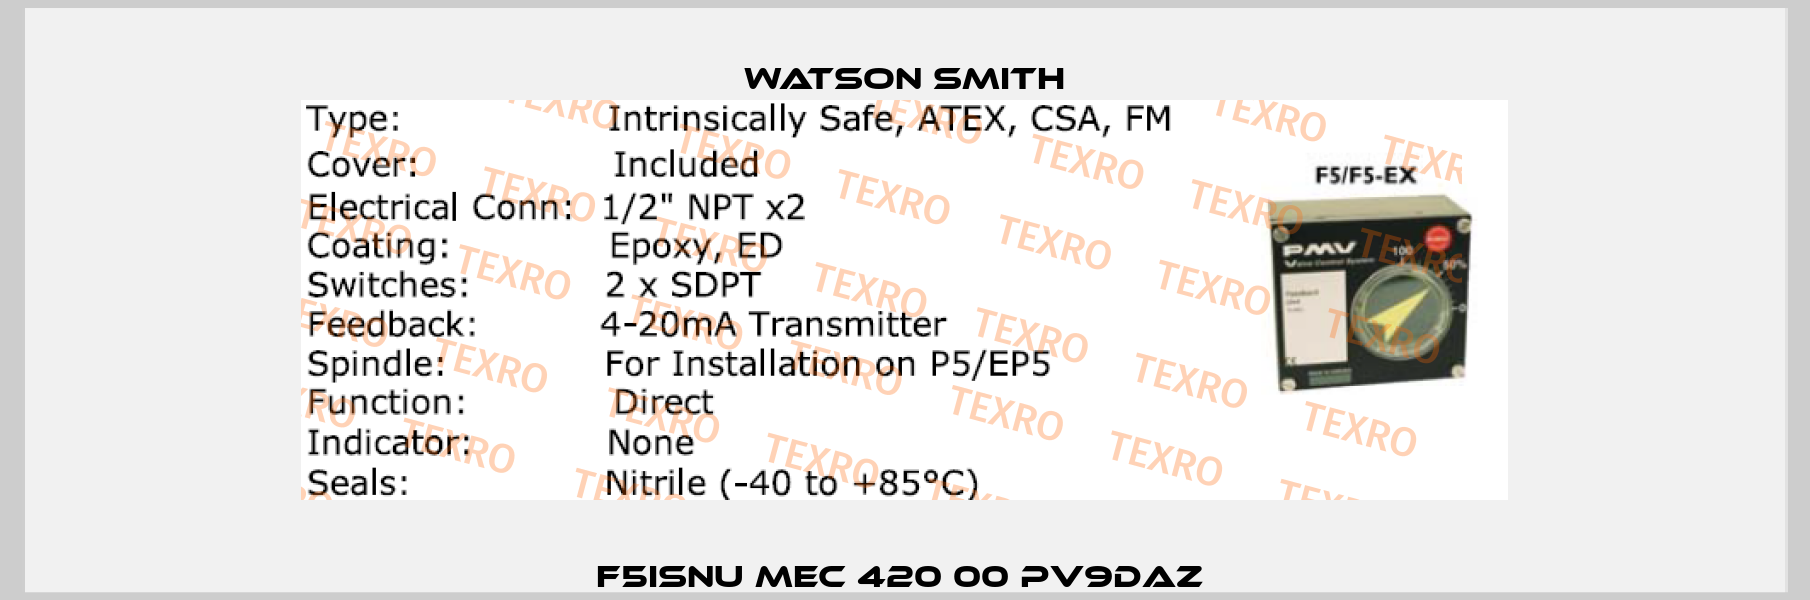 F5ISNU MEC 420 00 PV9DAZ  Watson Smith